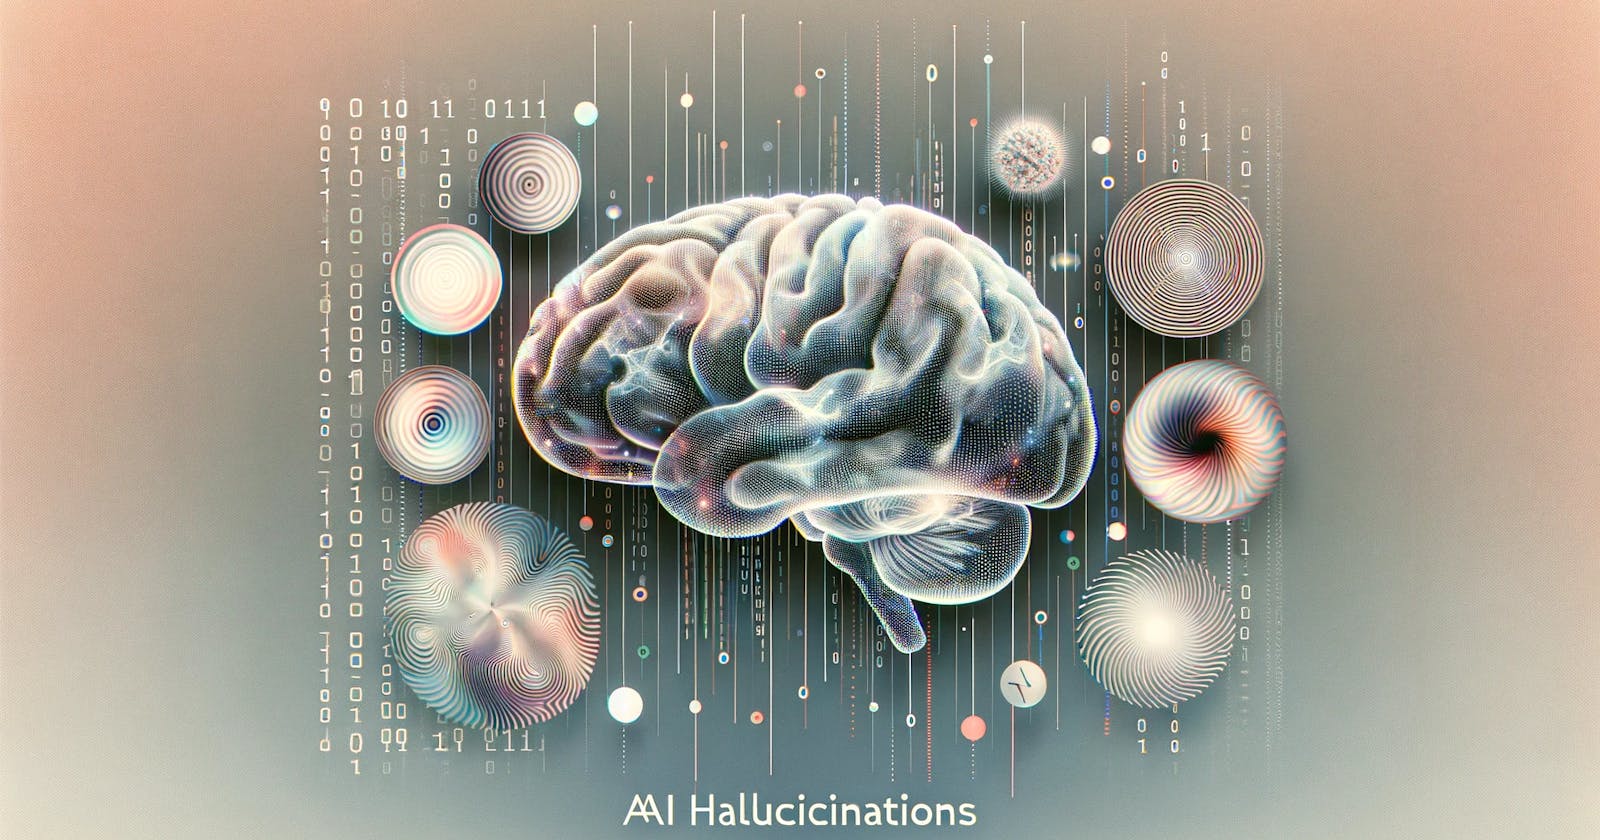 Large Language Models and the Phenomenon of AI Hallucinations